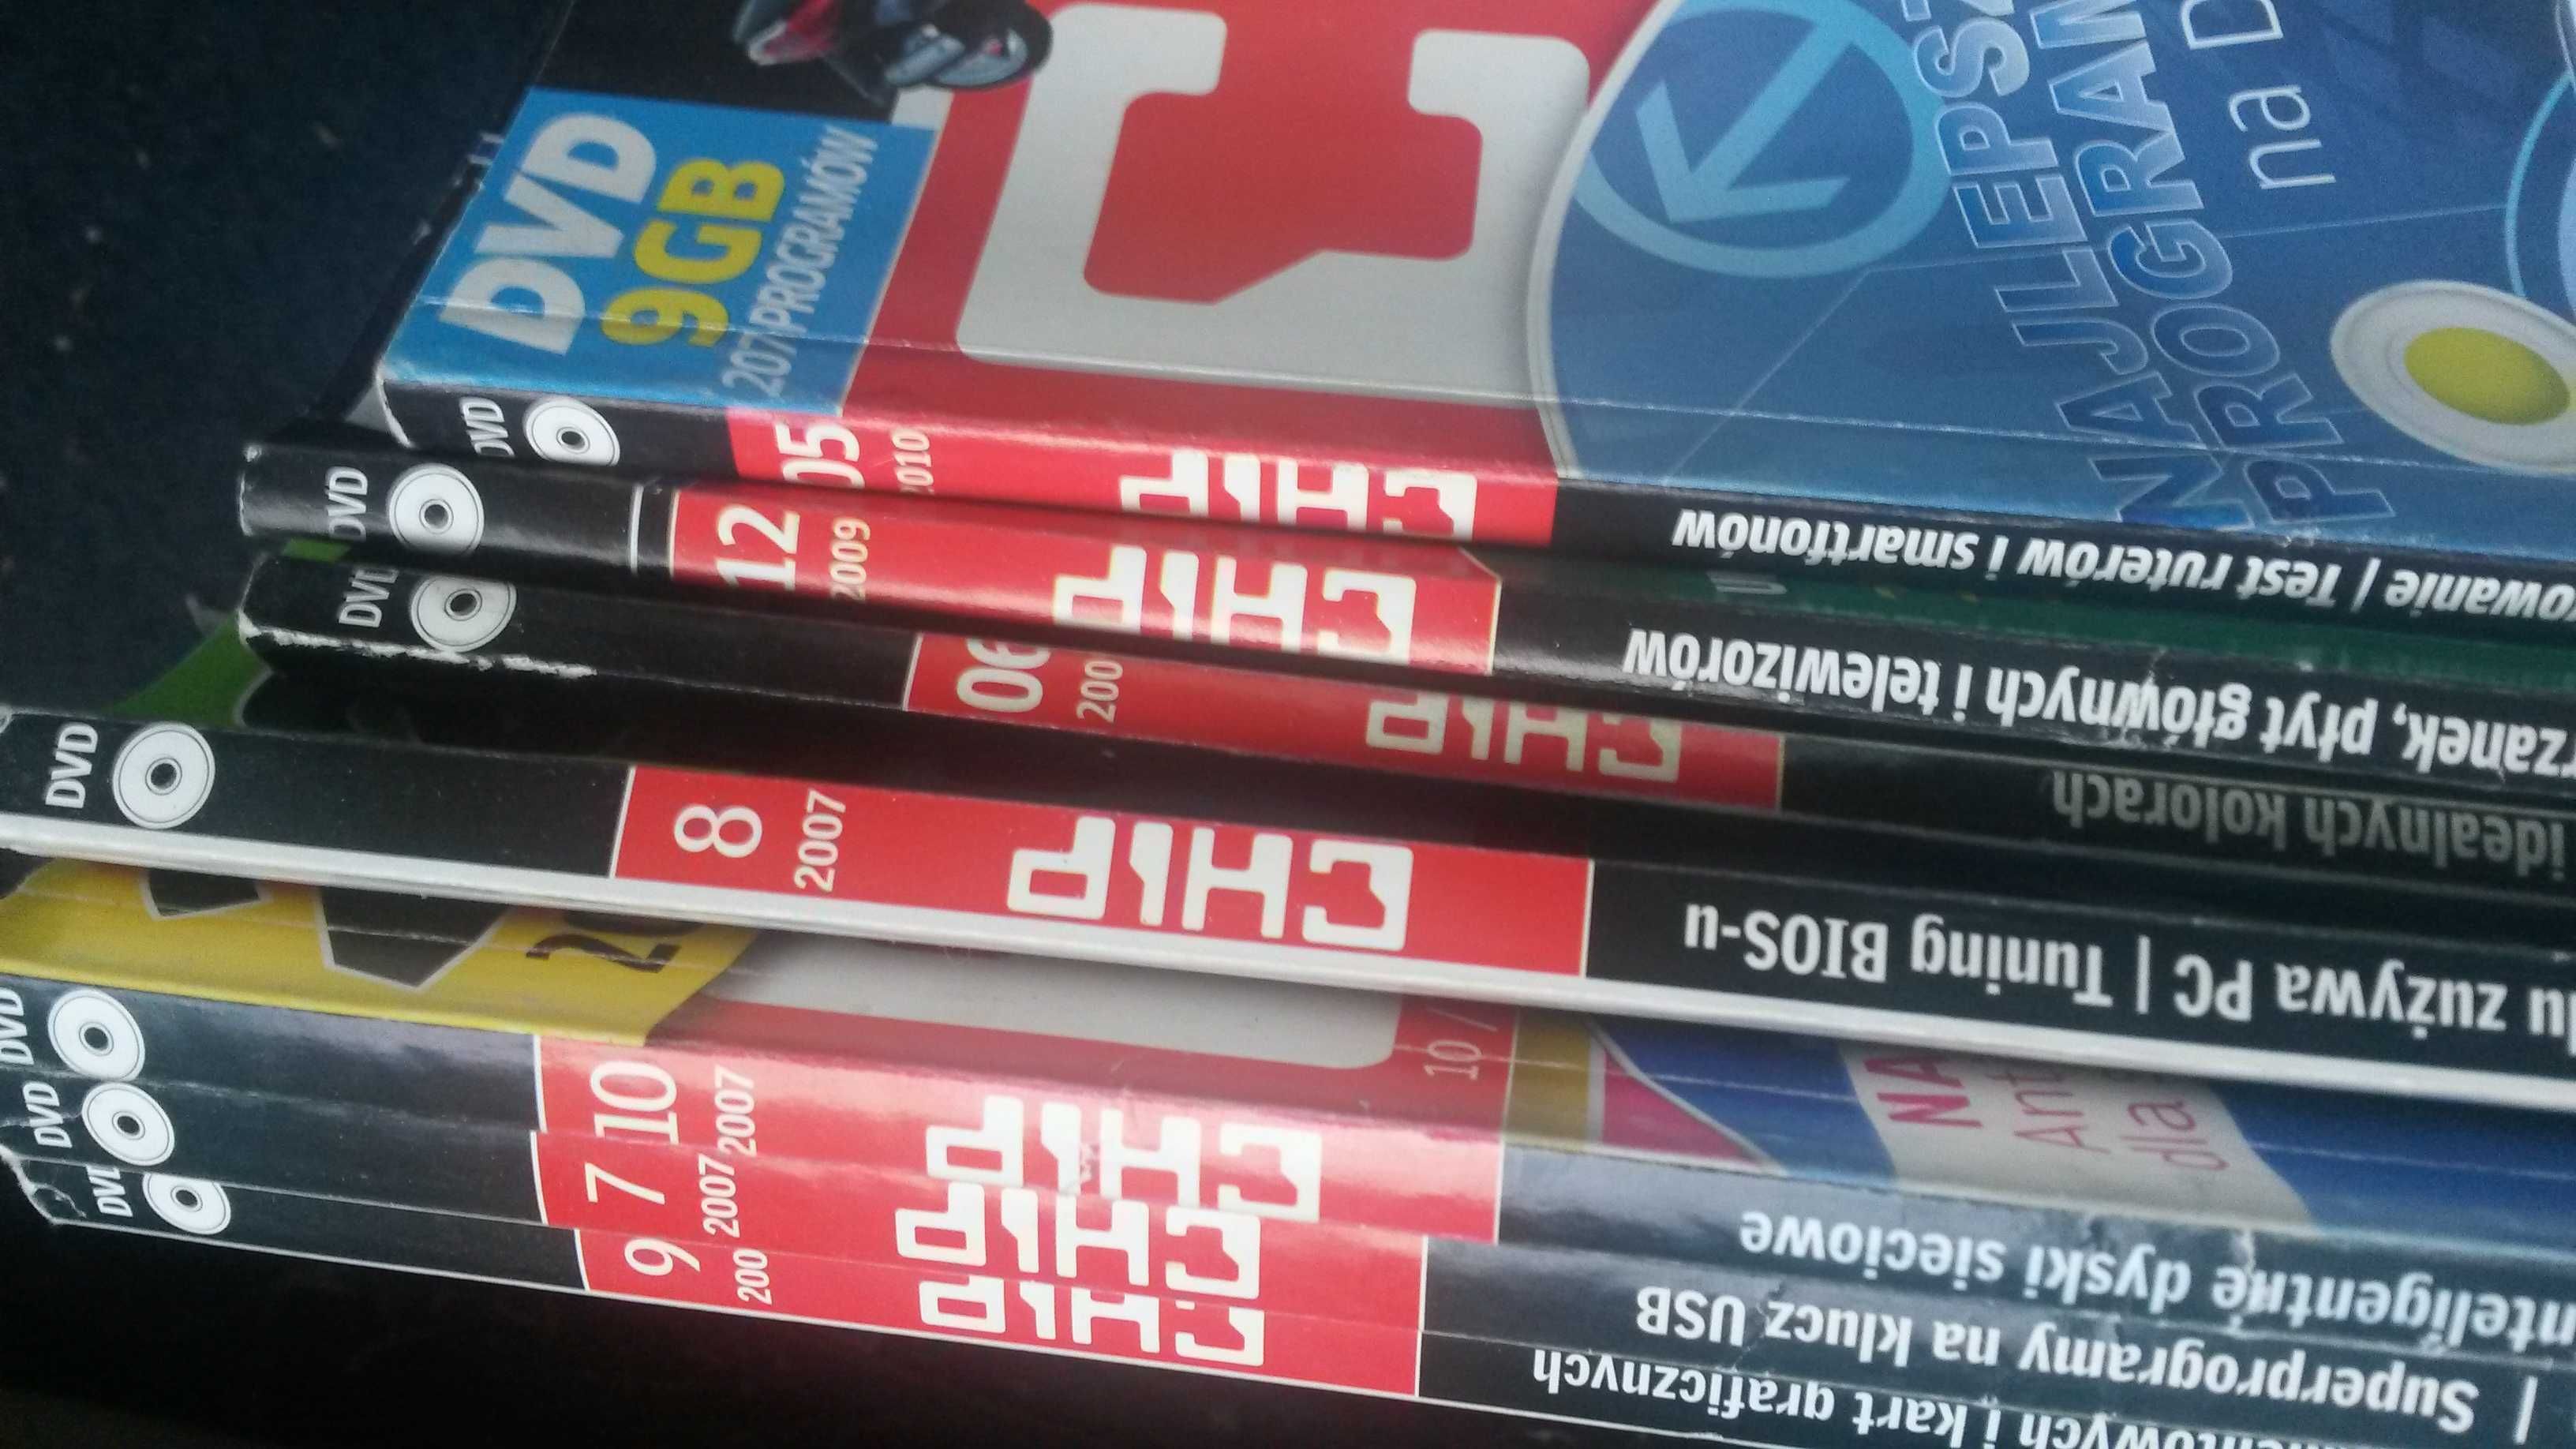 Magazyn czasopismo komputer Chip PC Format stare egzemplarze różne